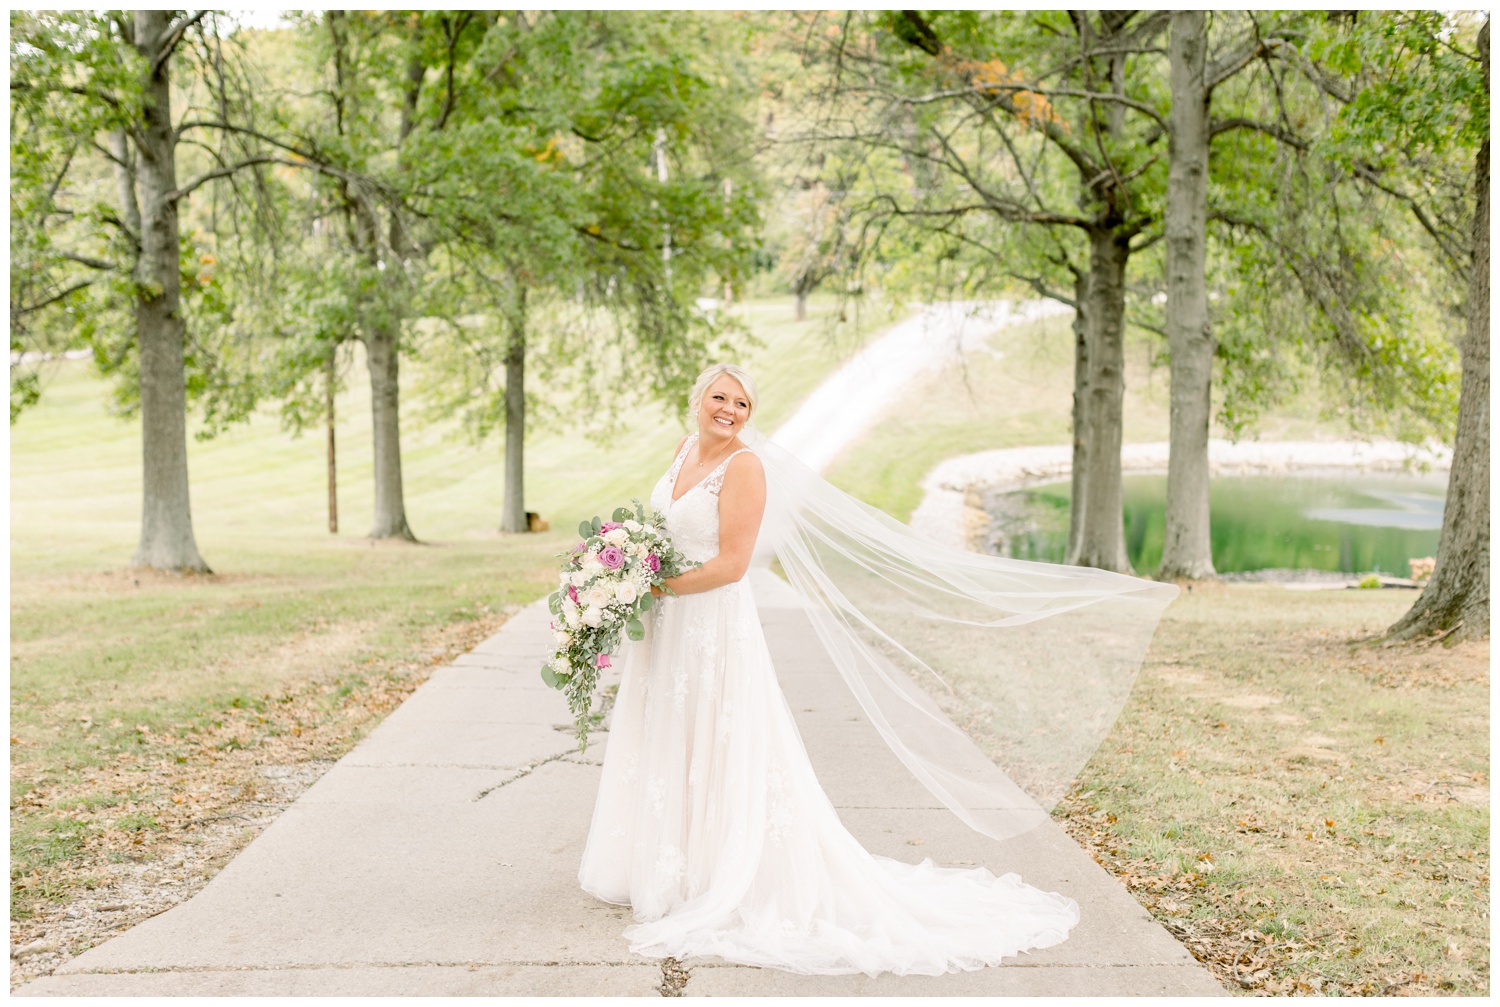 Northern Kentucky Wedding Venue Bridal Portraits with Long Veil